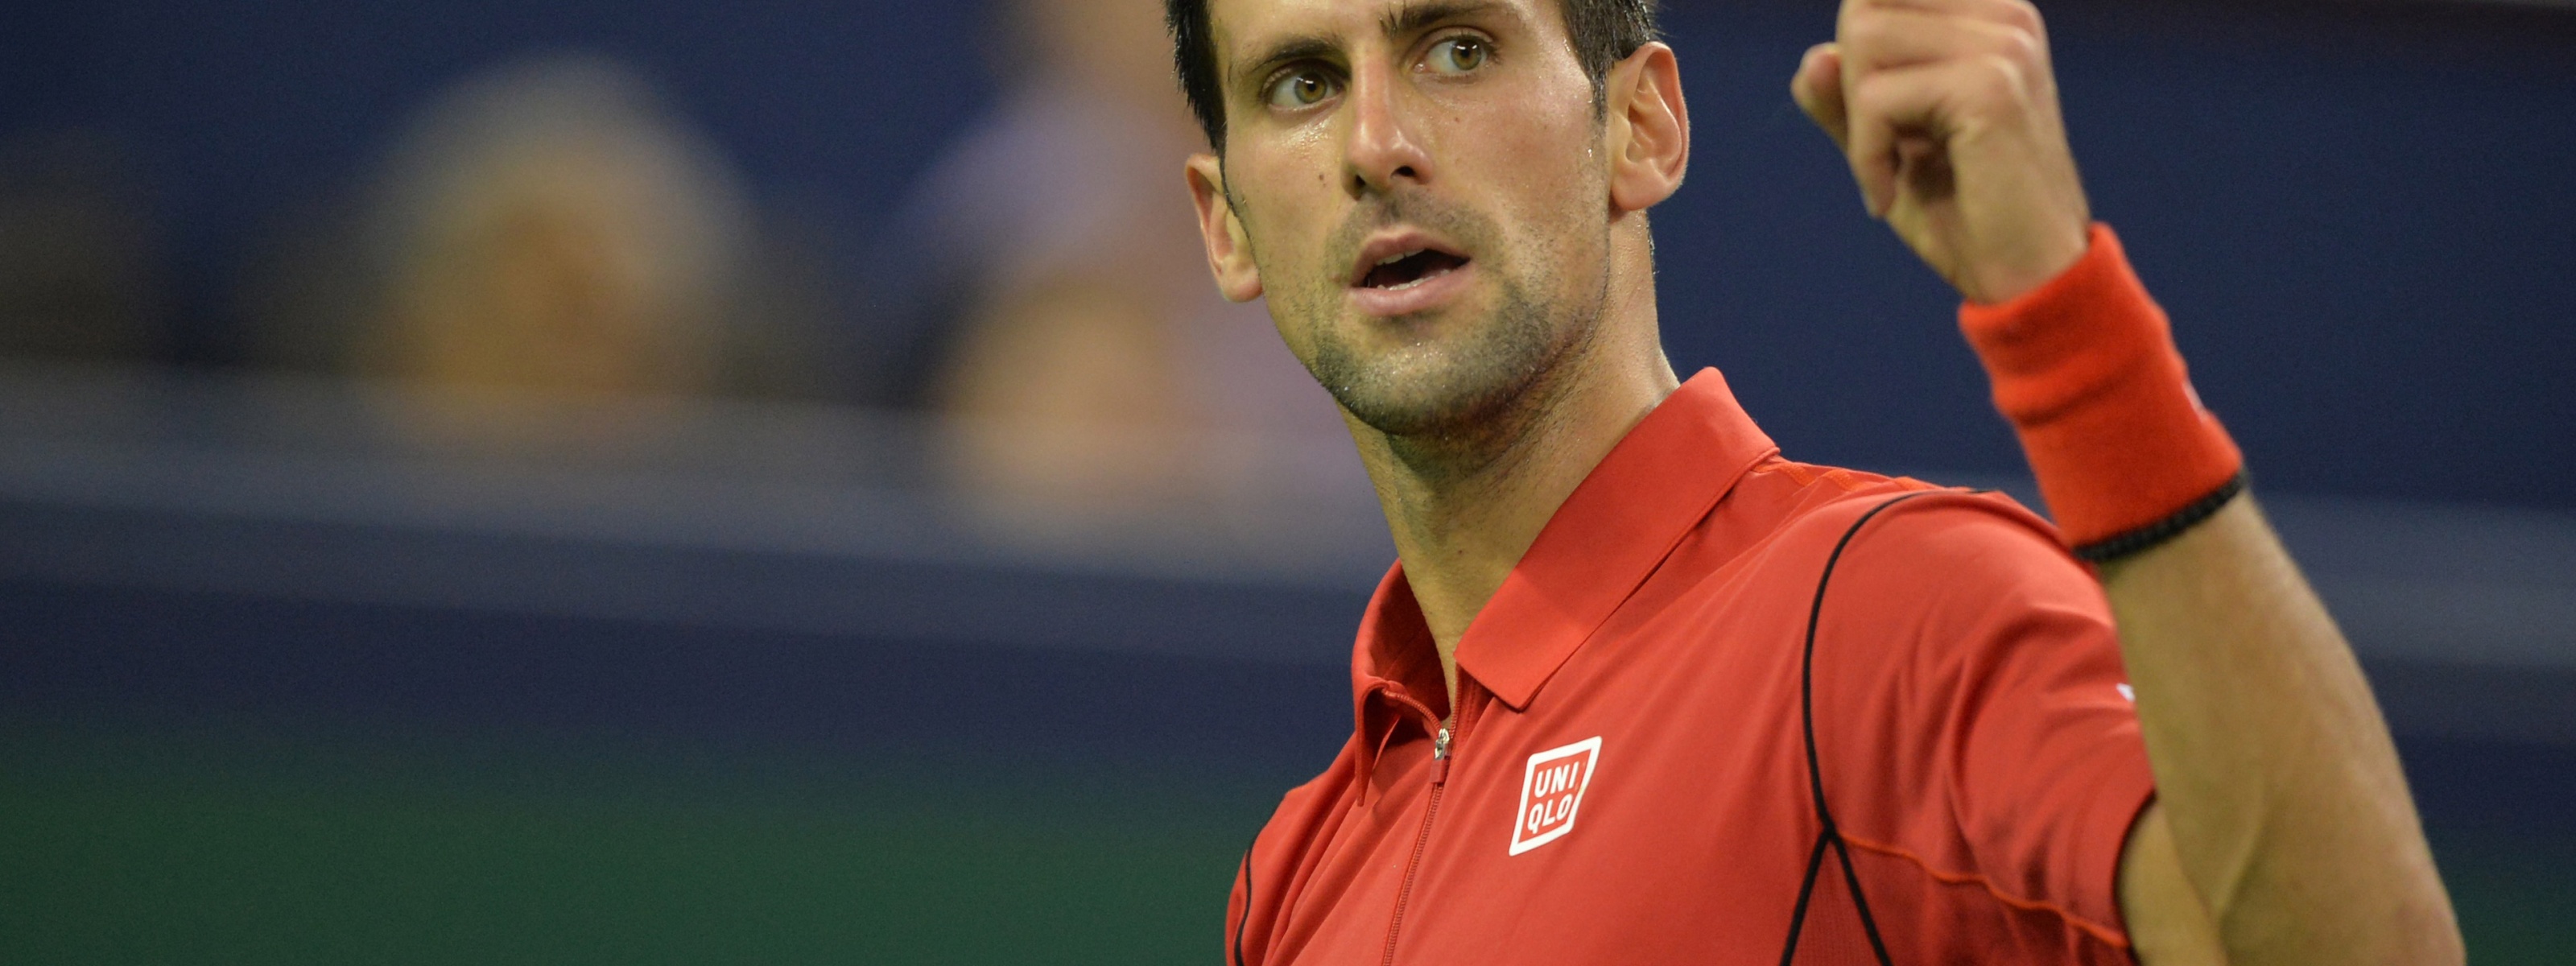 Novak Djokovic Tennis Player